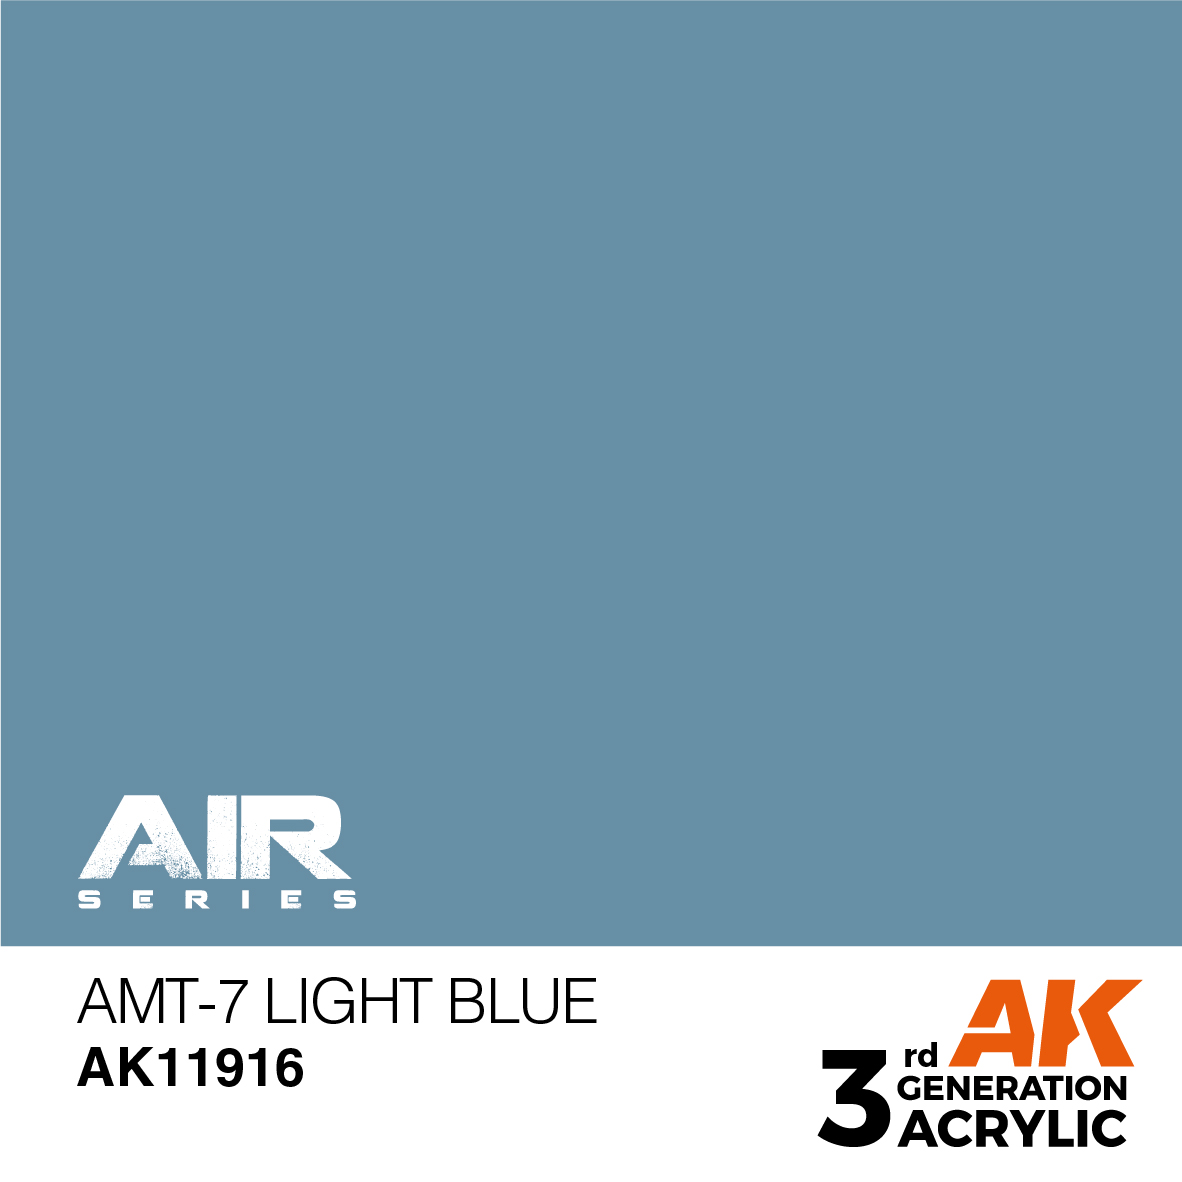 Buy AMT-7 Light Blue - AIR online for2,75€